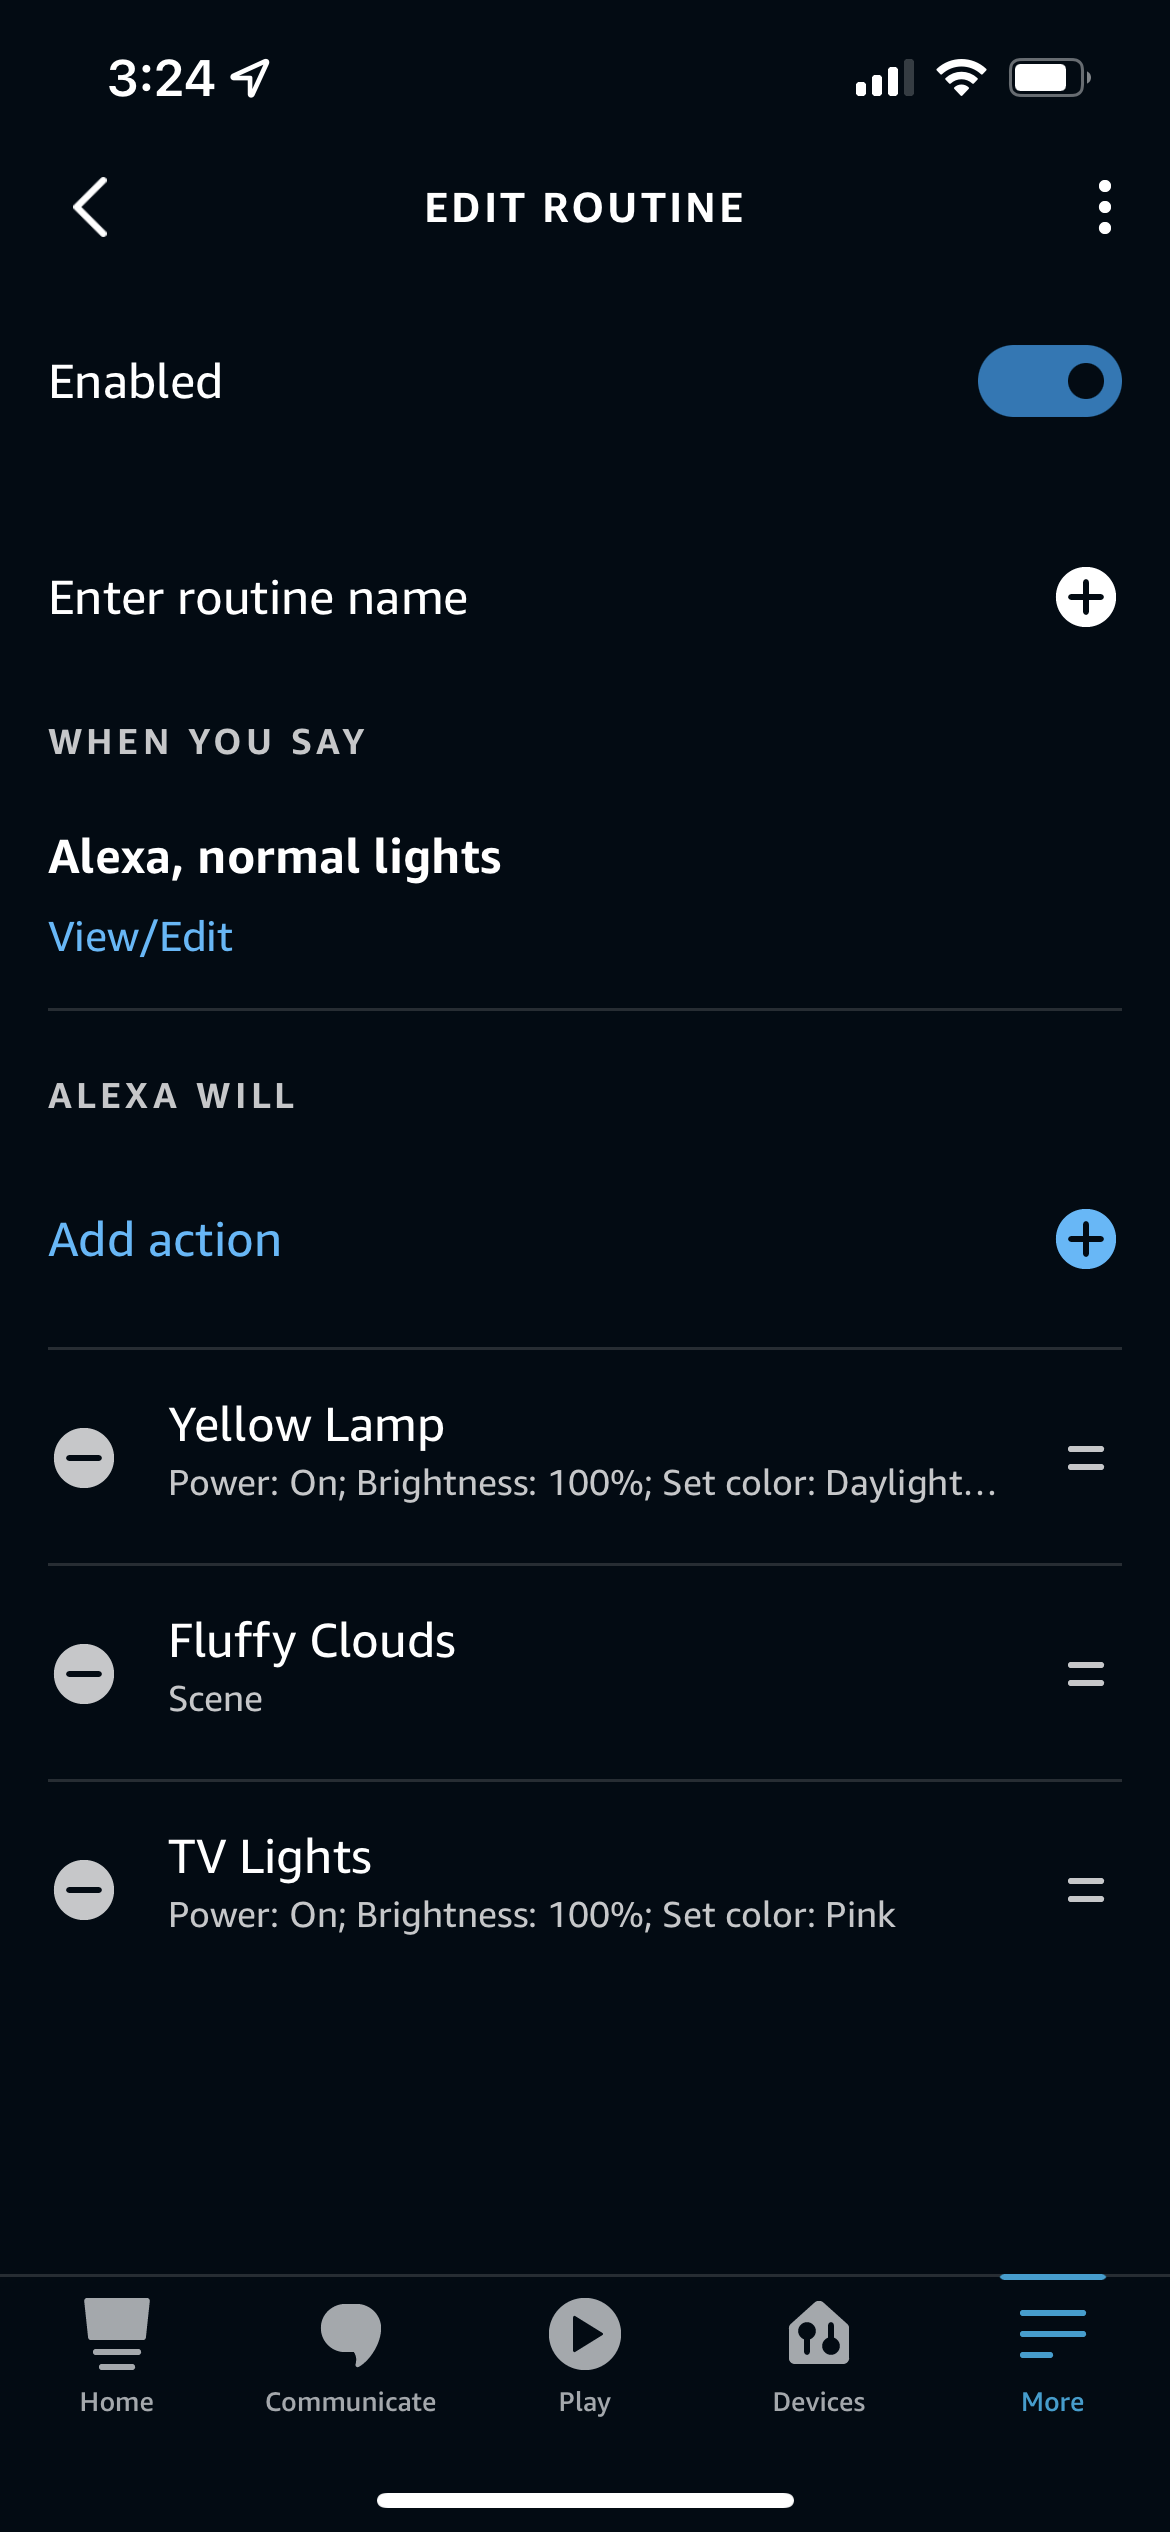 A routine in the Amazon Alexa app